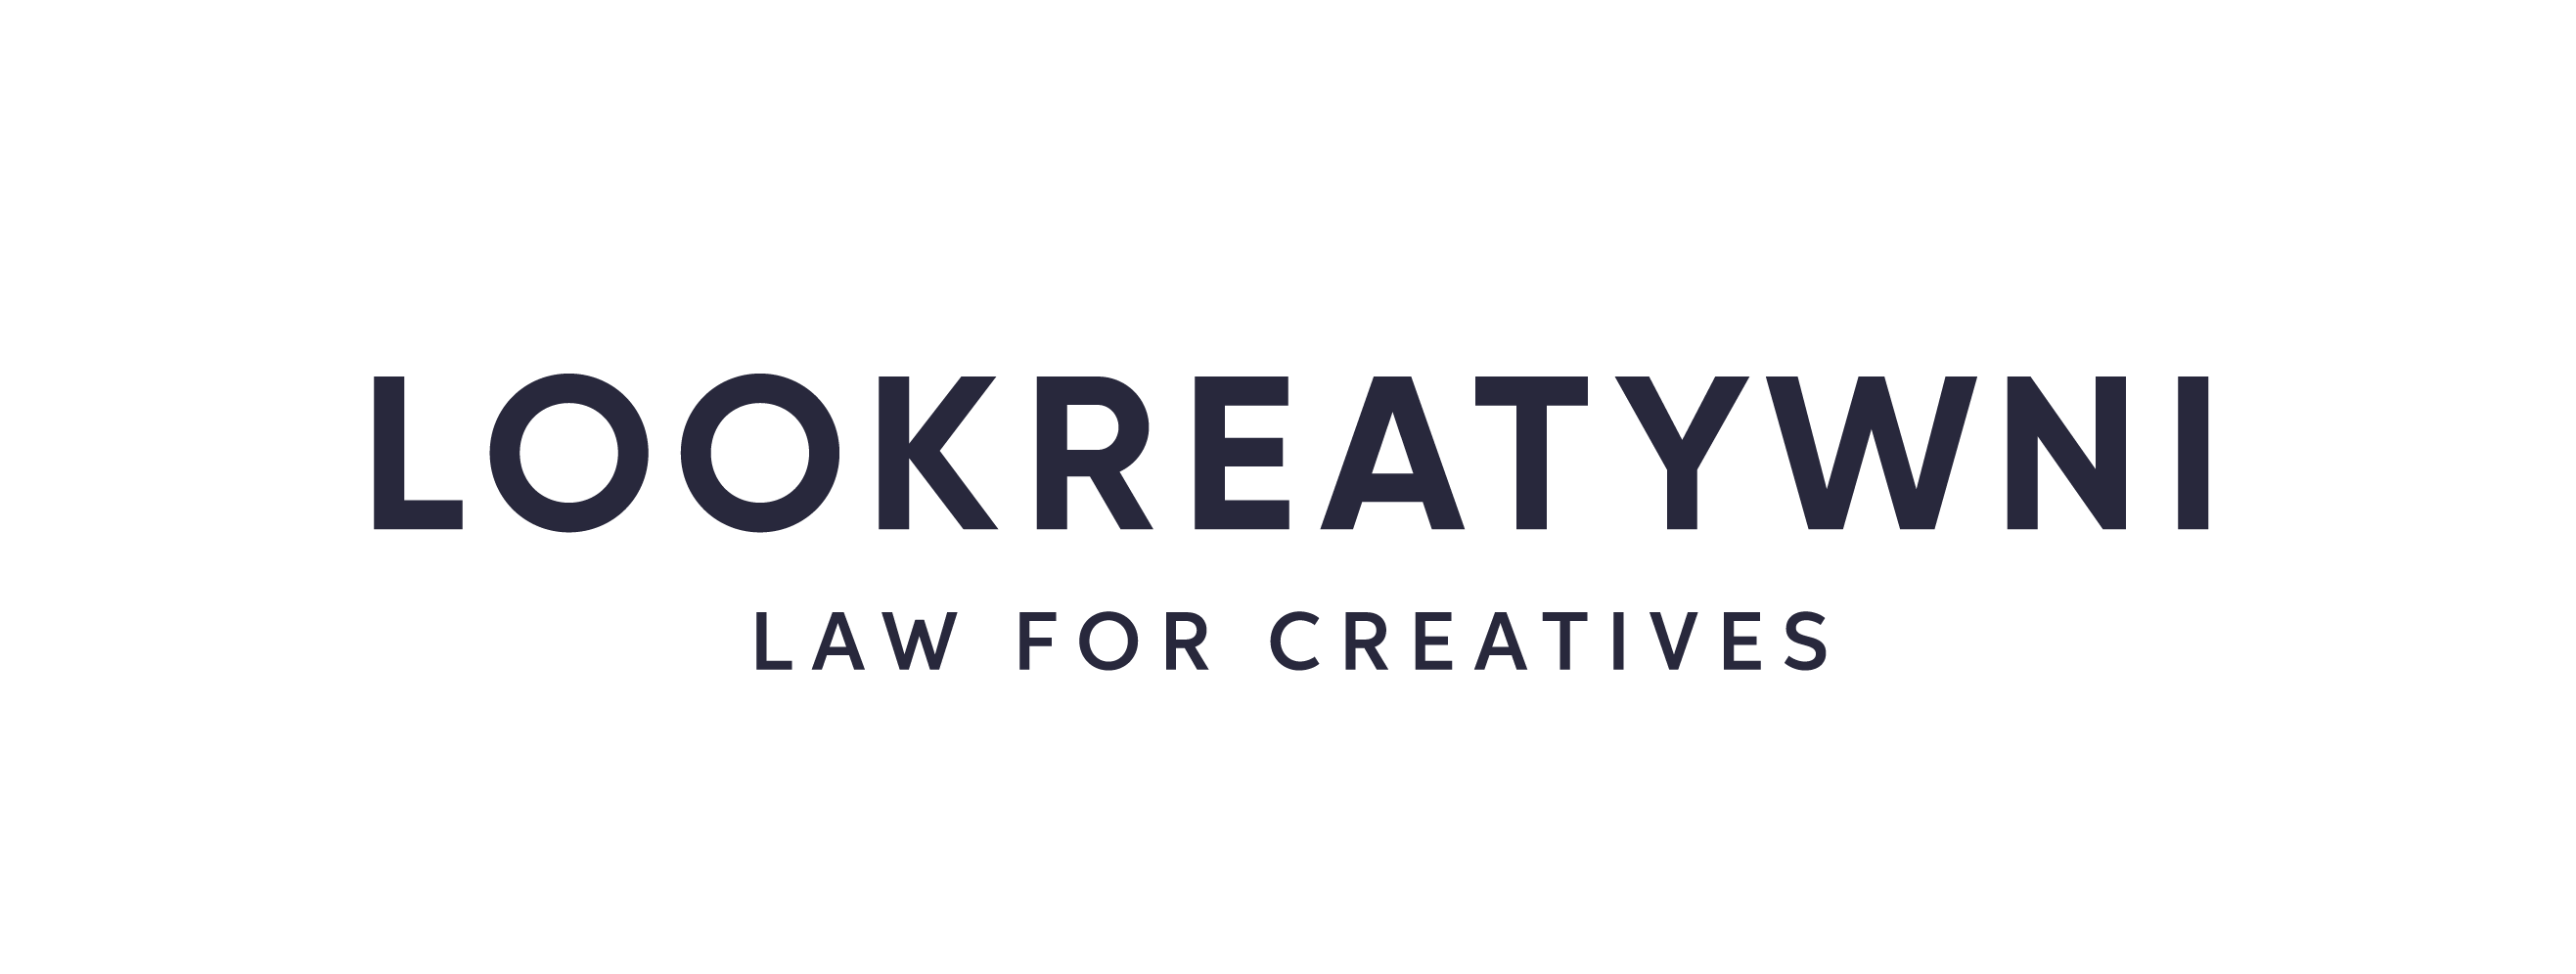 Lookreatywni Law for Creatives